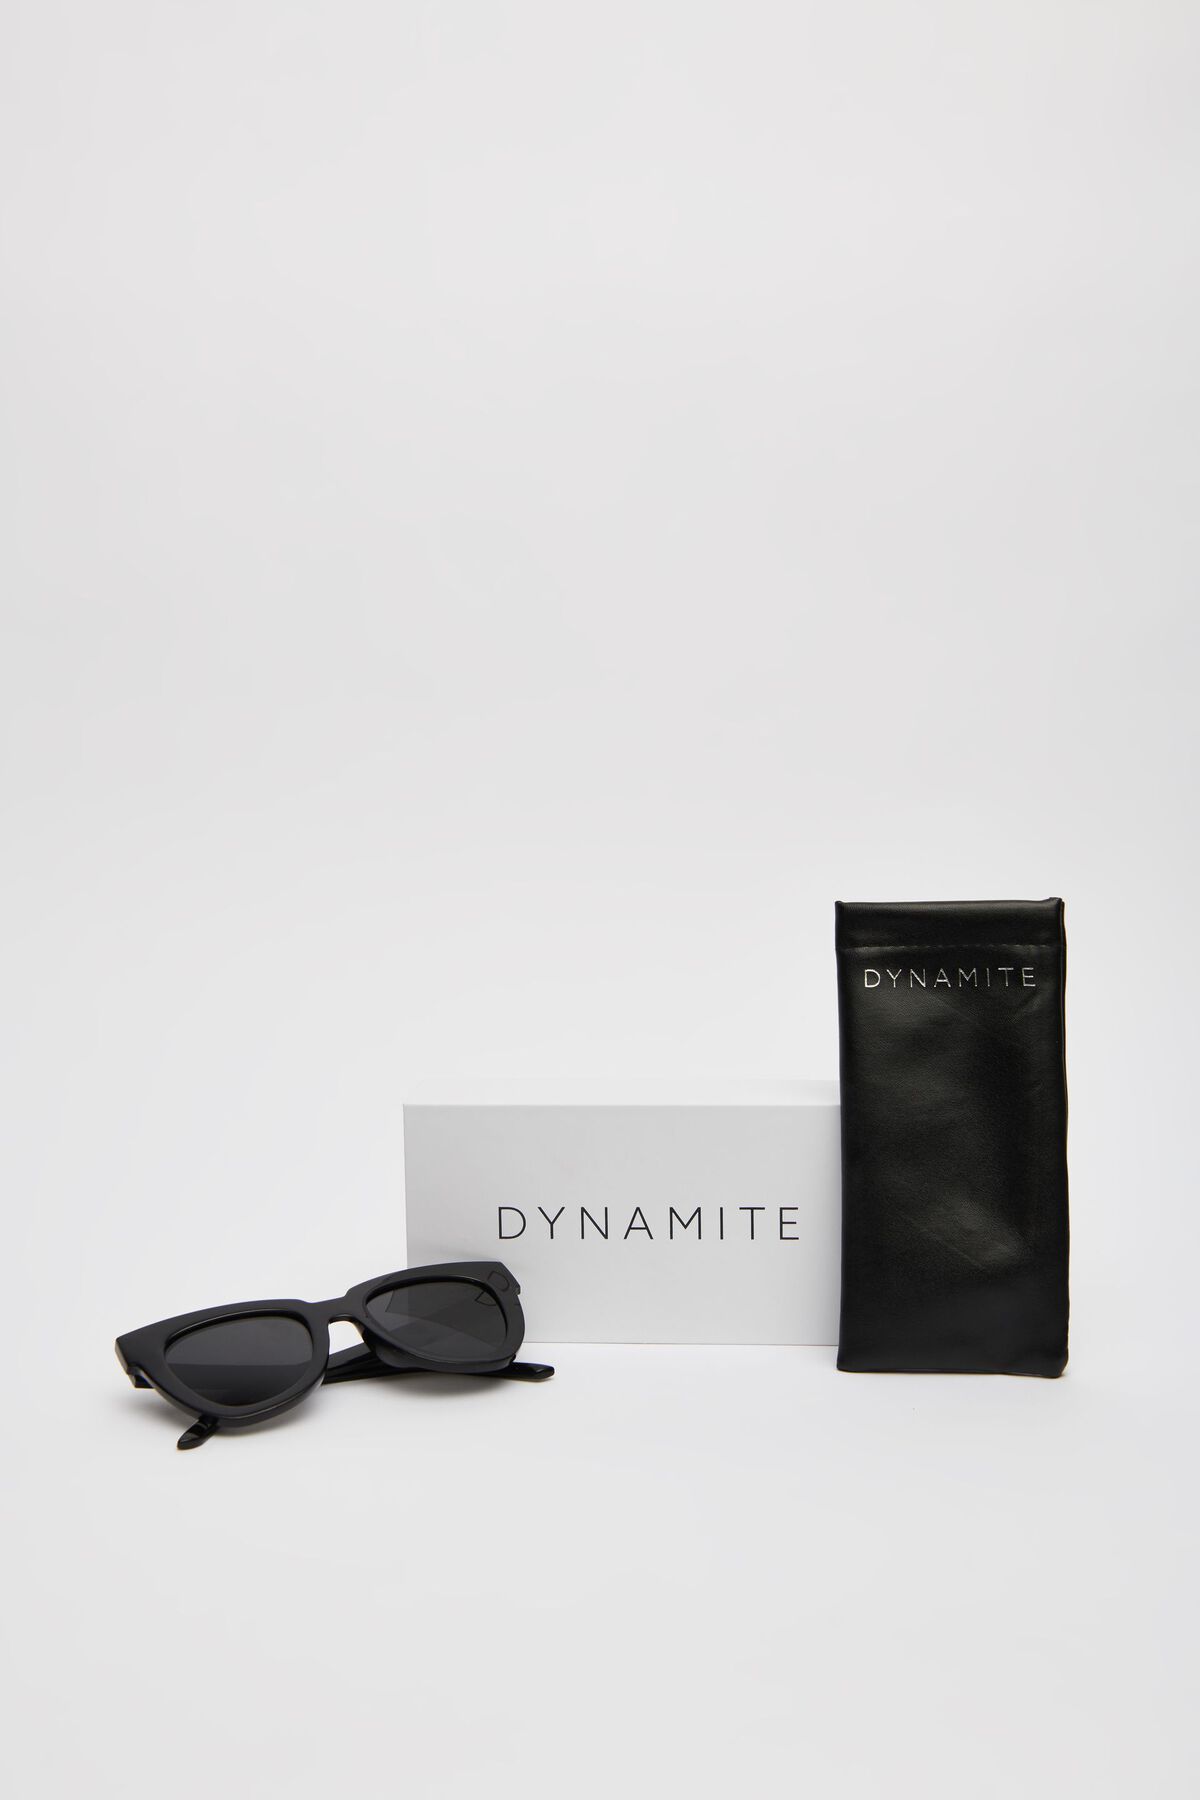 Dynamite Oversized Wayfarer Sunglasses. 10